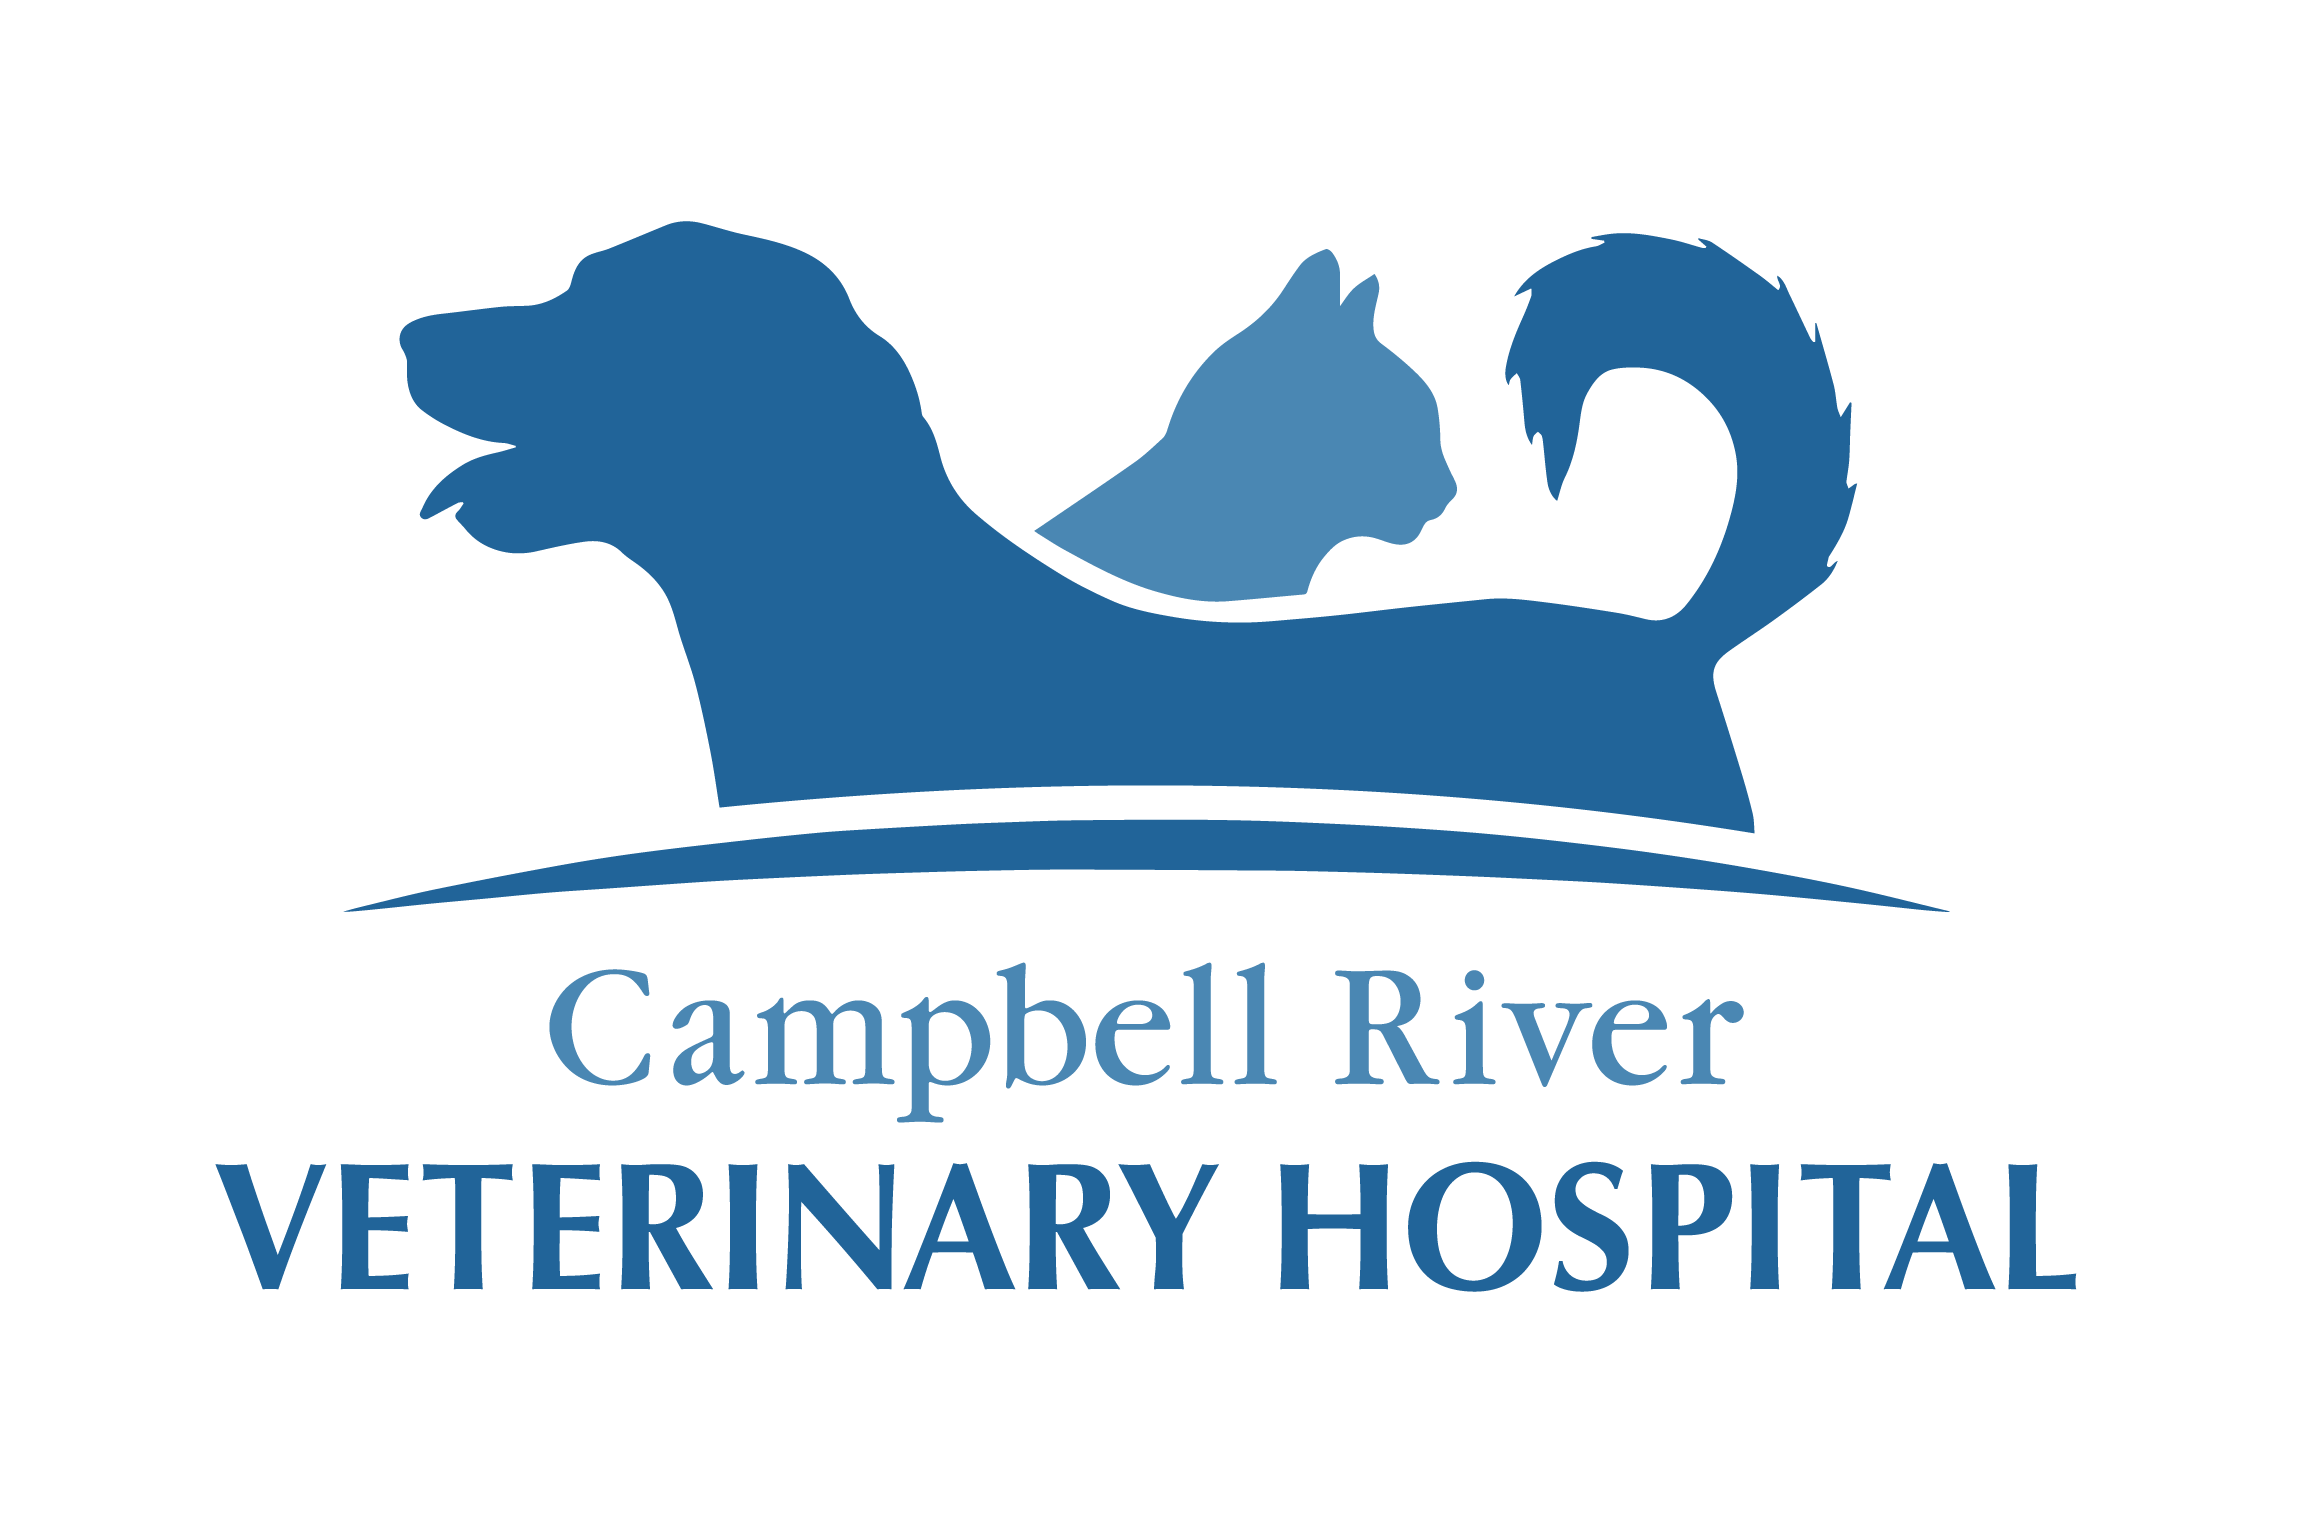 Campbell River Veterinary Hospital: Veterinarian in Campbell River, BC